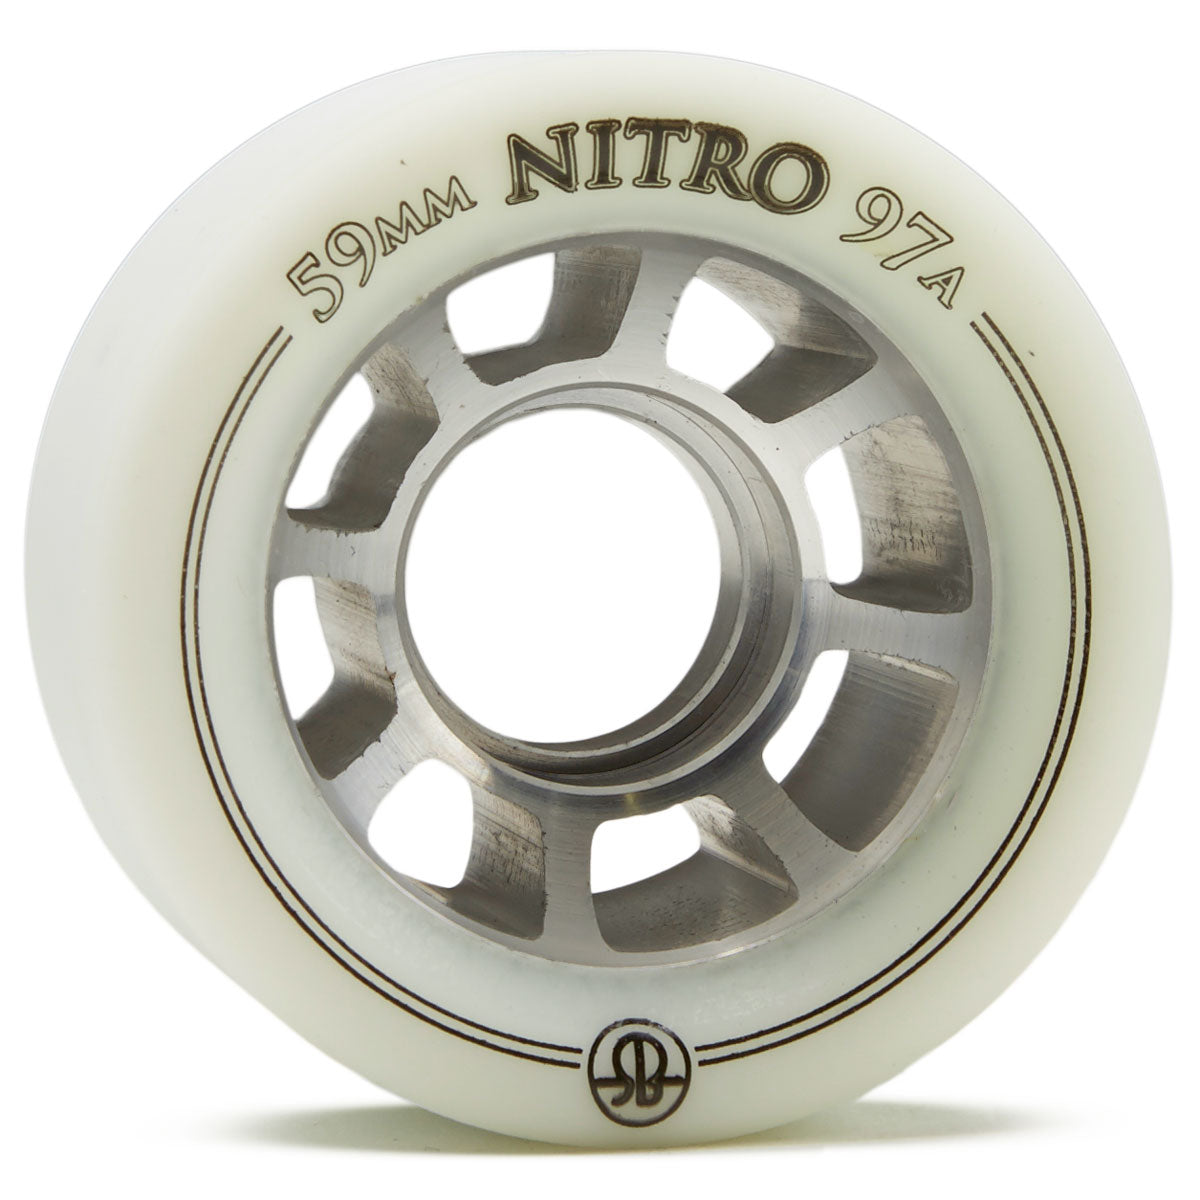 Rollerbones Nitro 97A Skate Wheels - White - 59mm image 1